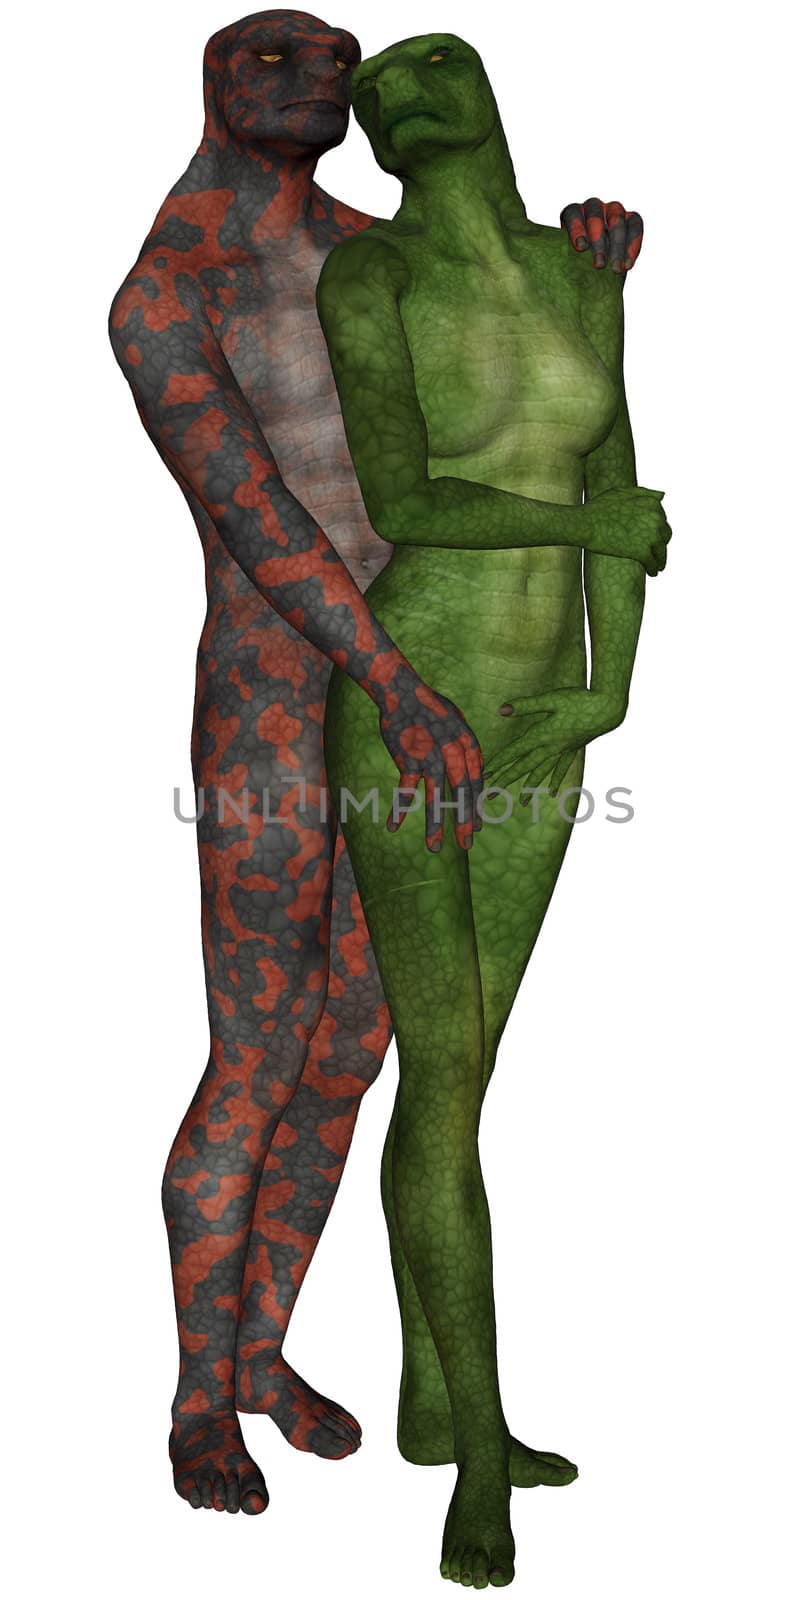 Lizard man and woman lovers by Wampa